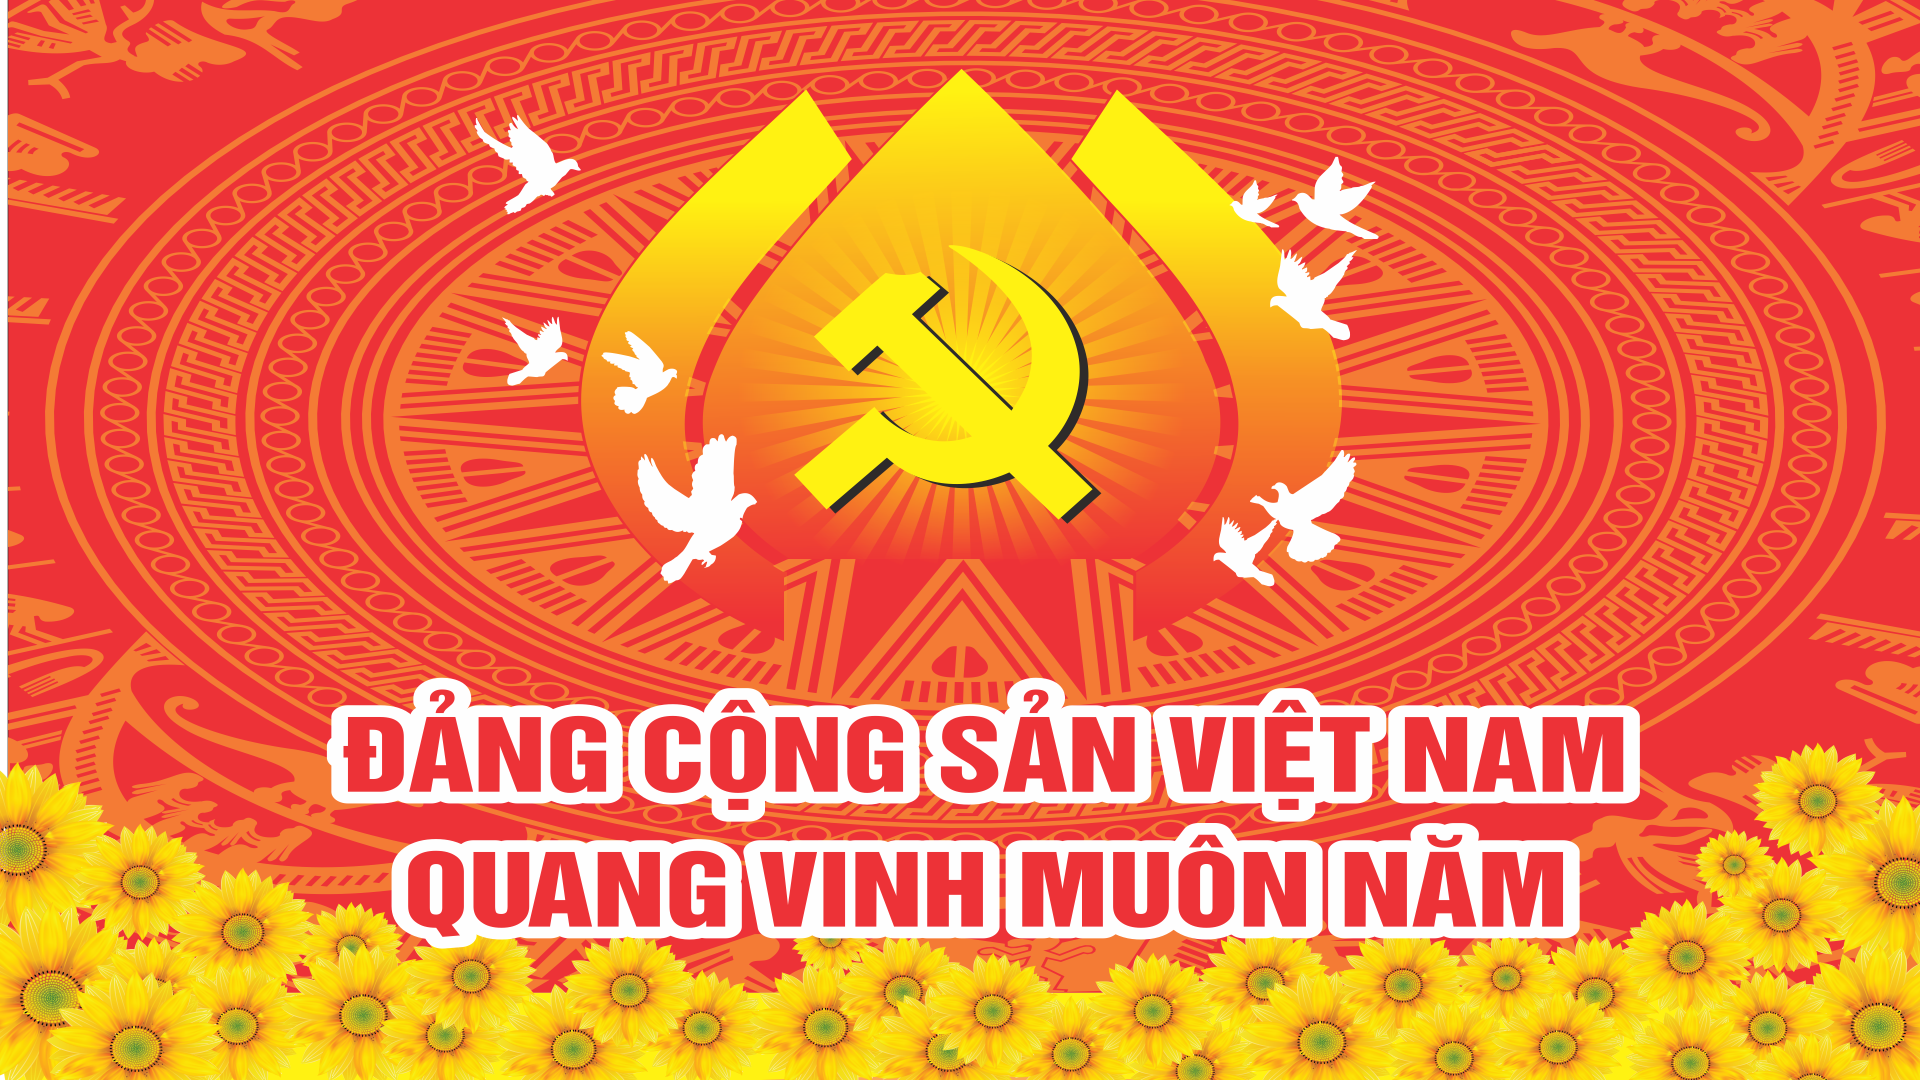 13 DCSVN Quang vinh muon nam